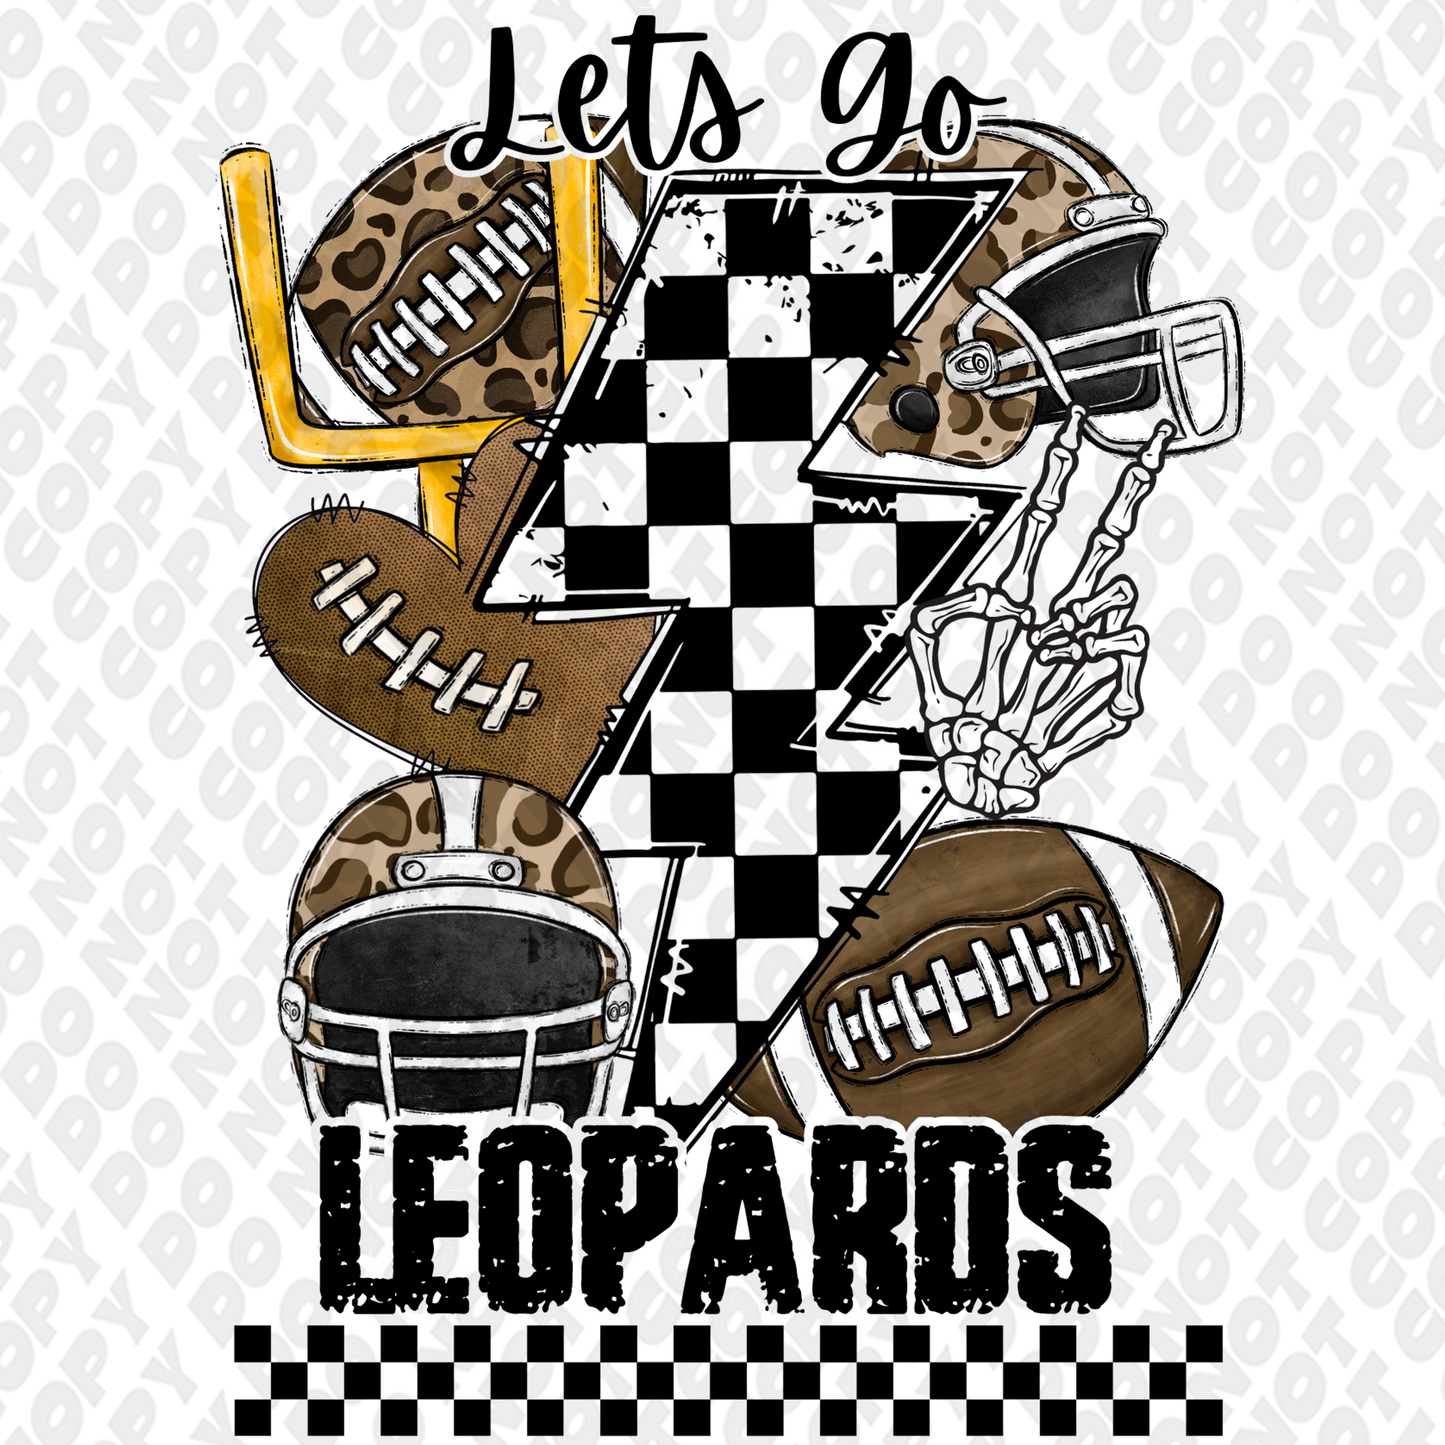 Let's go Leopards